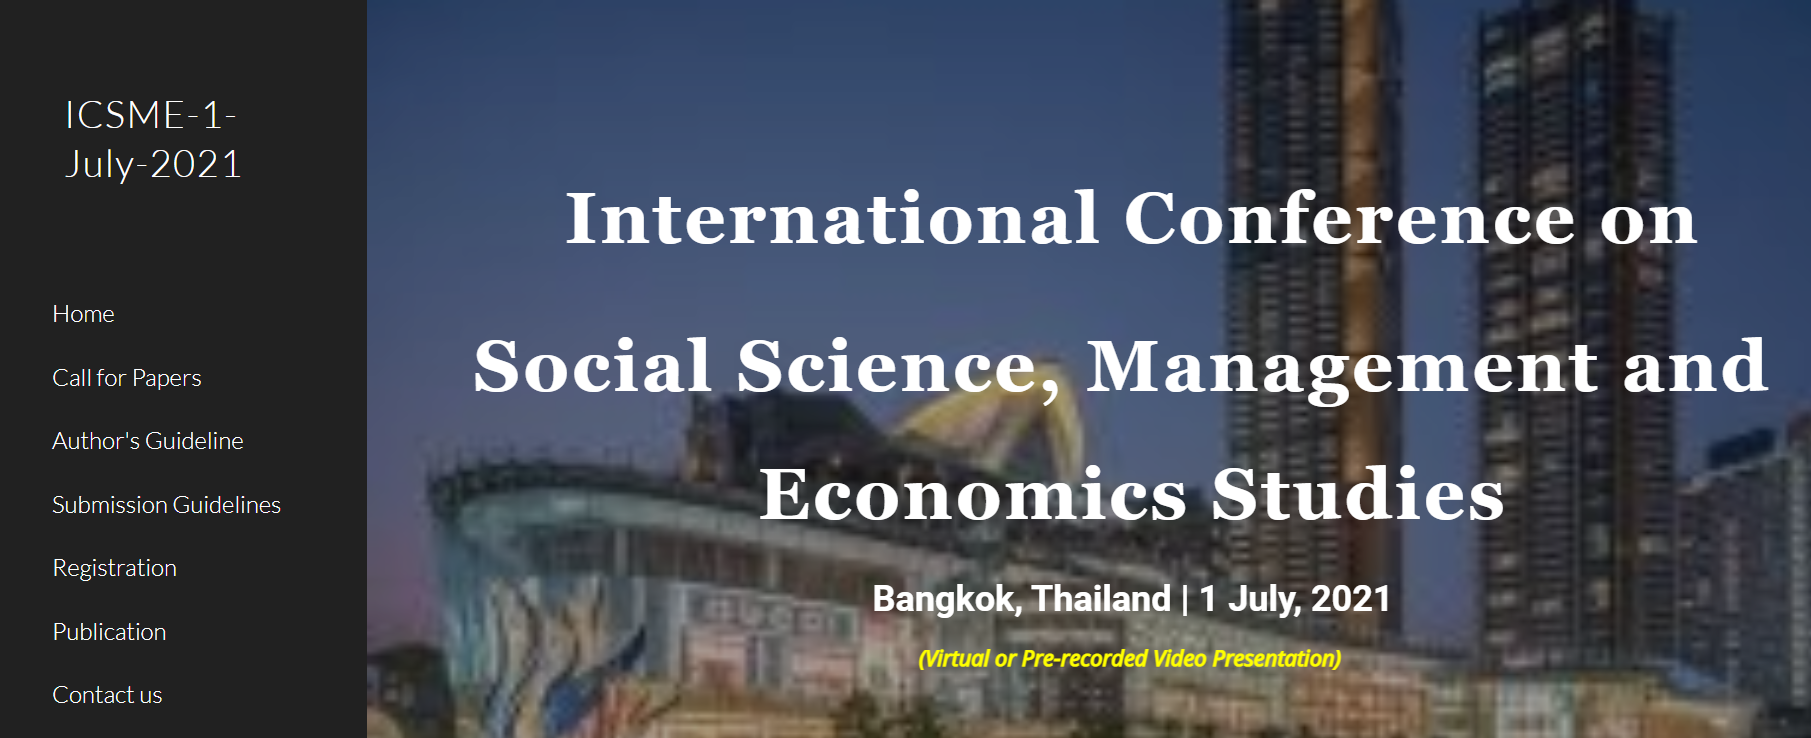 International Conference on Social Science, Management and Economics Studies, Bangkok, Thailand,Bangkok,Thailand